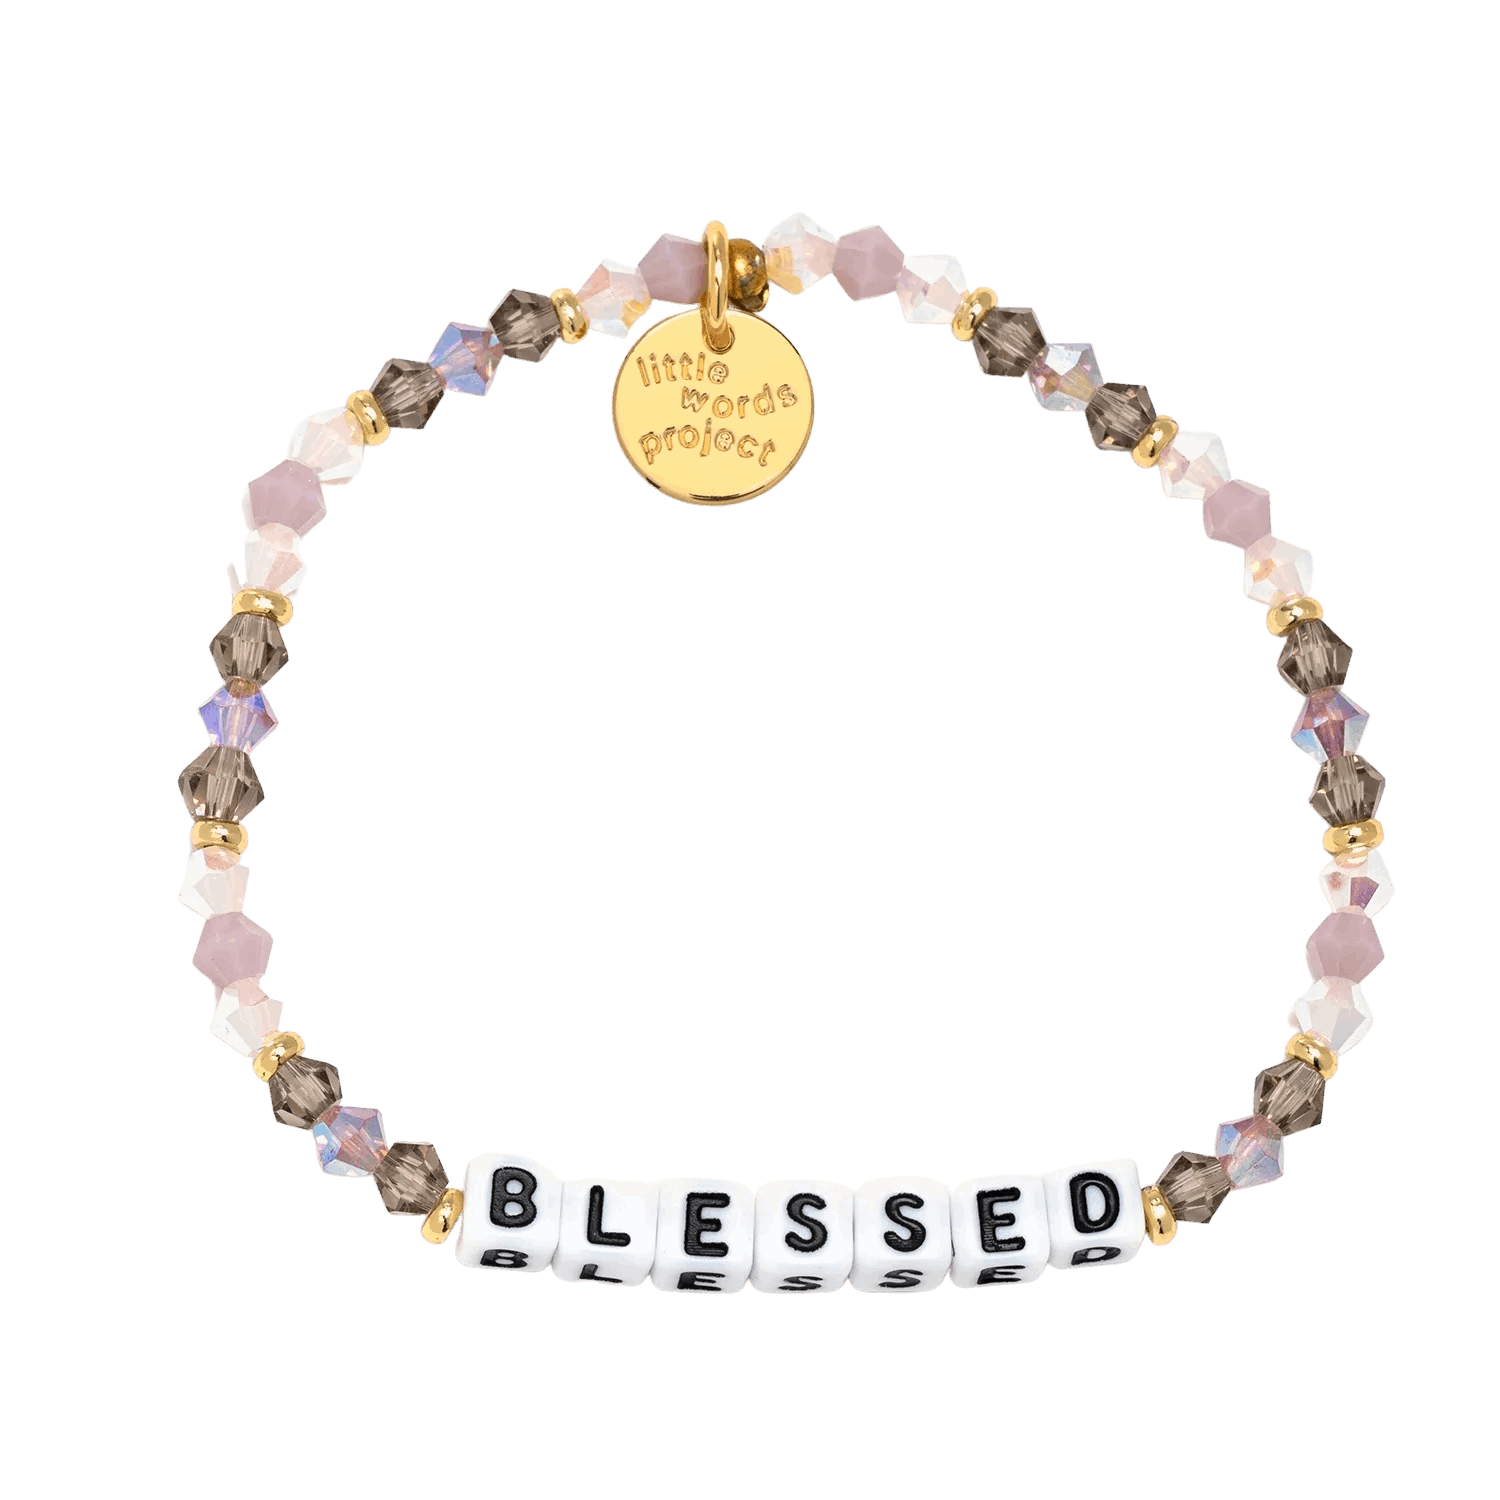 Blessed Little Words Project Trackable Bracelet